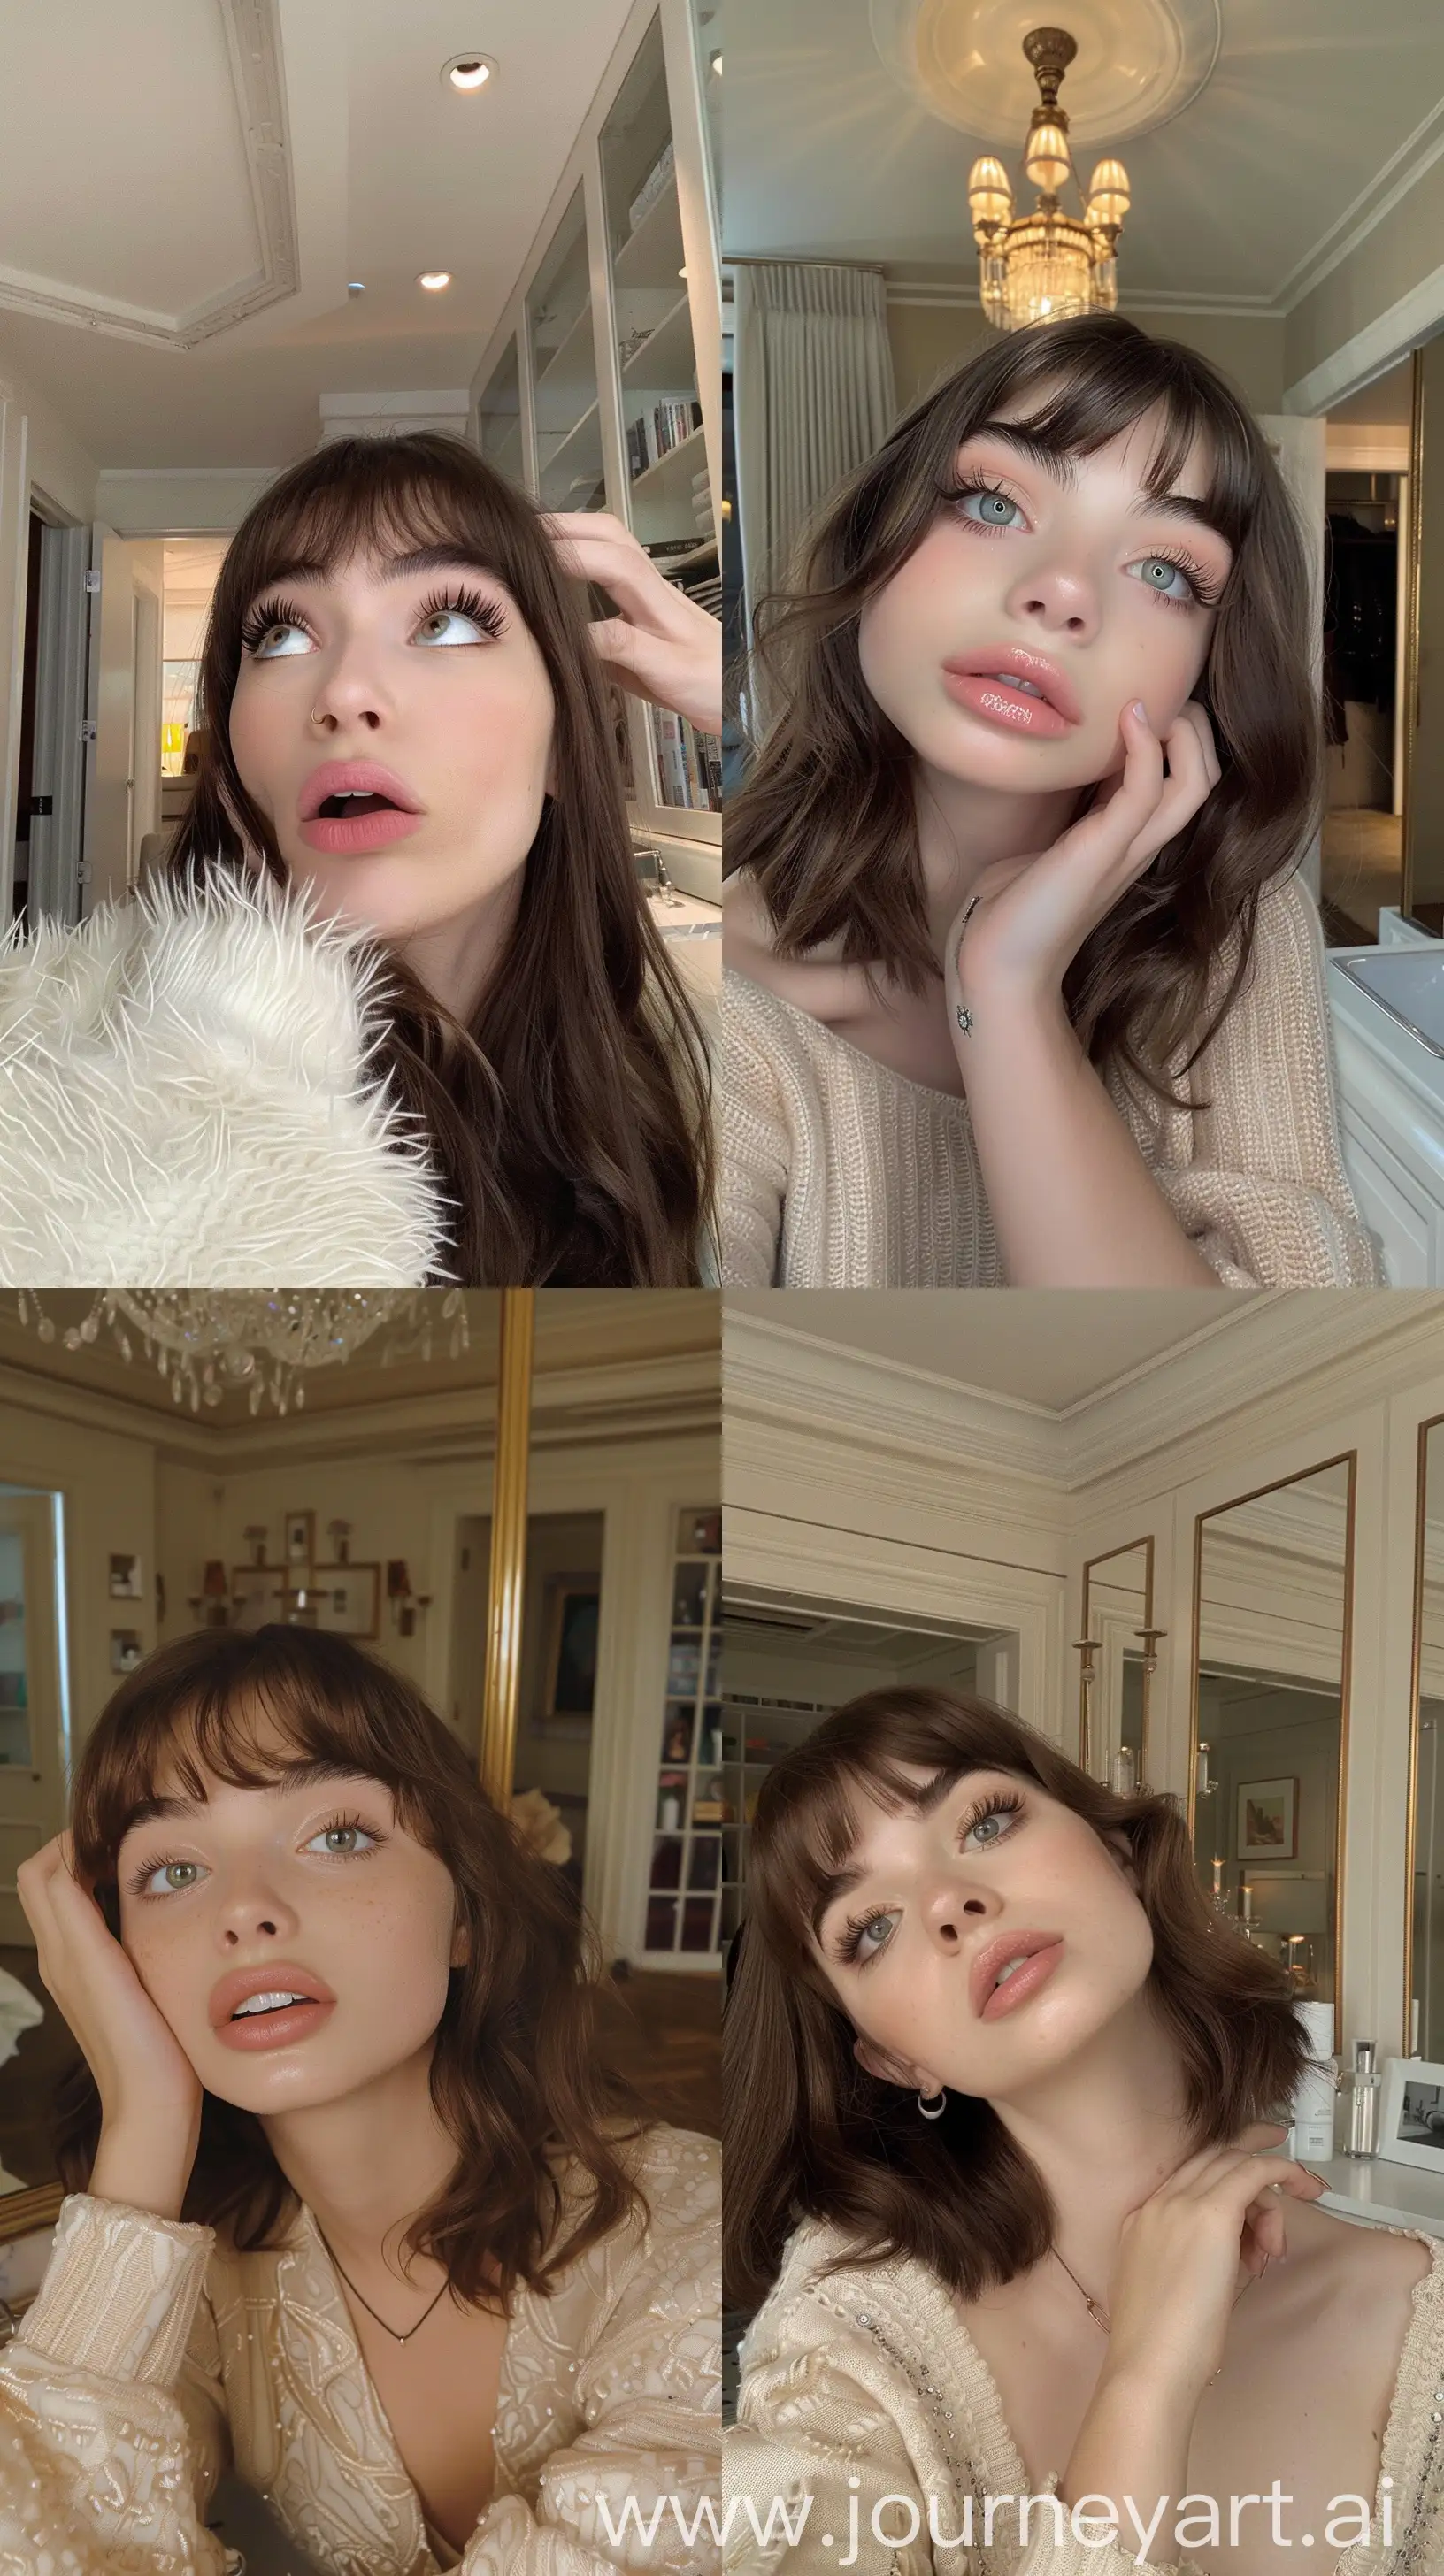 Teenage-Influencer-Haley-Kalils-Little-Sister-Captures-Aesthetic-Selfie-in-New-York-Apartment